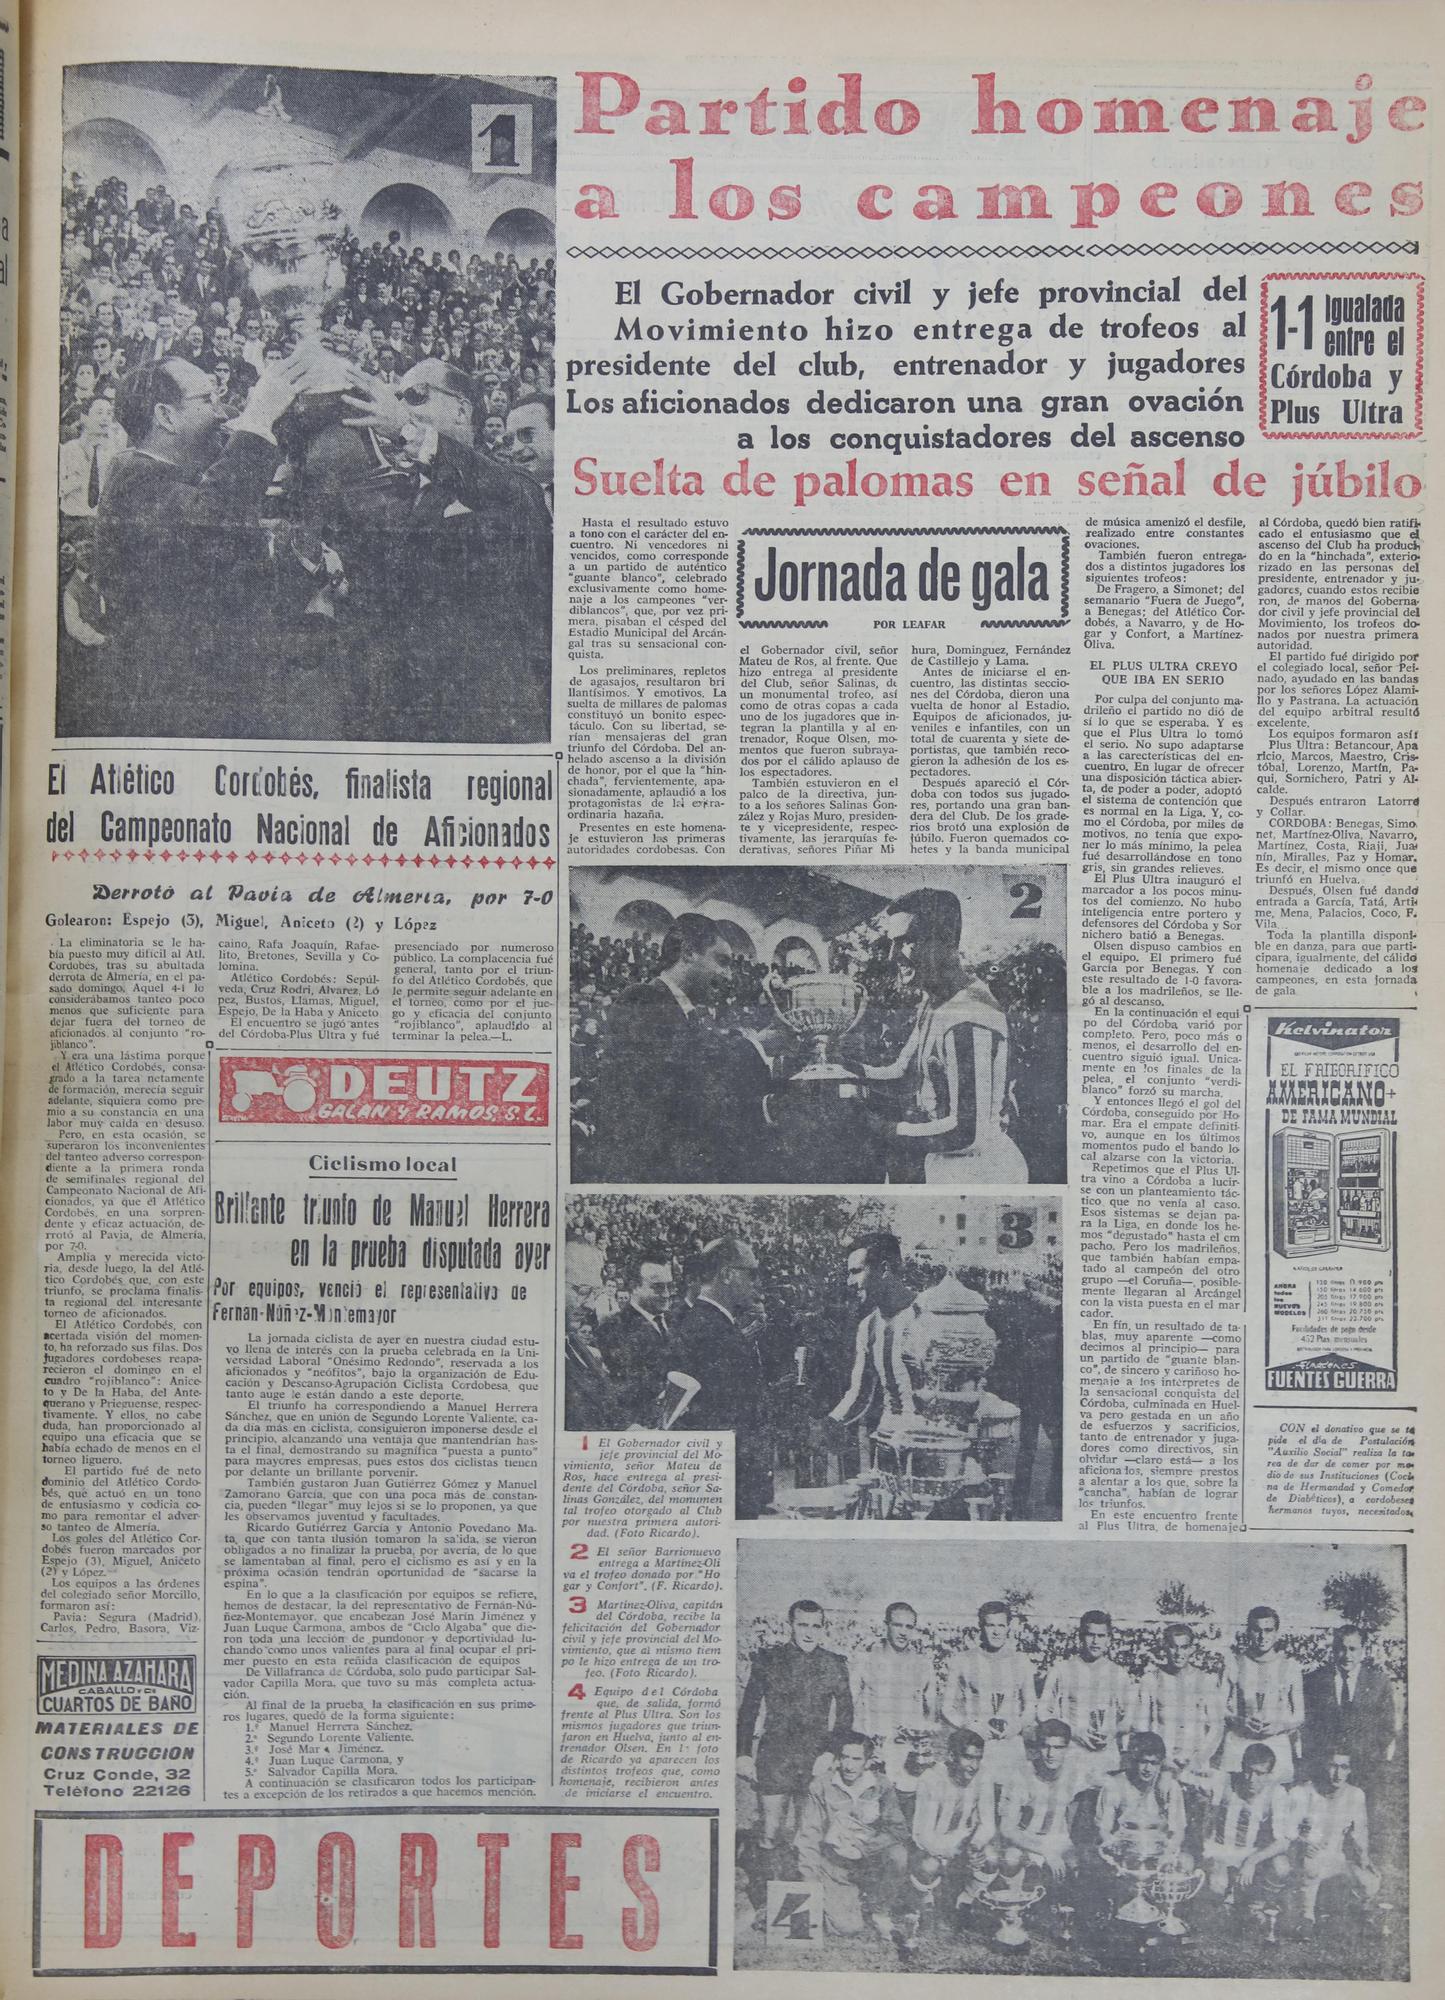 Crónica del partido homenaje al Córdoba CF por su primer ascenso a Primera.